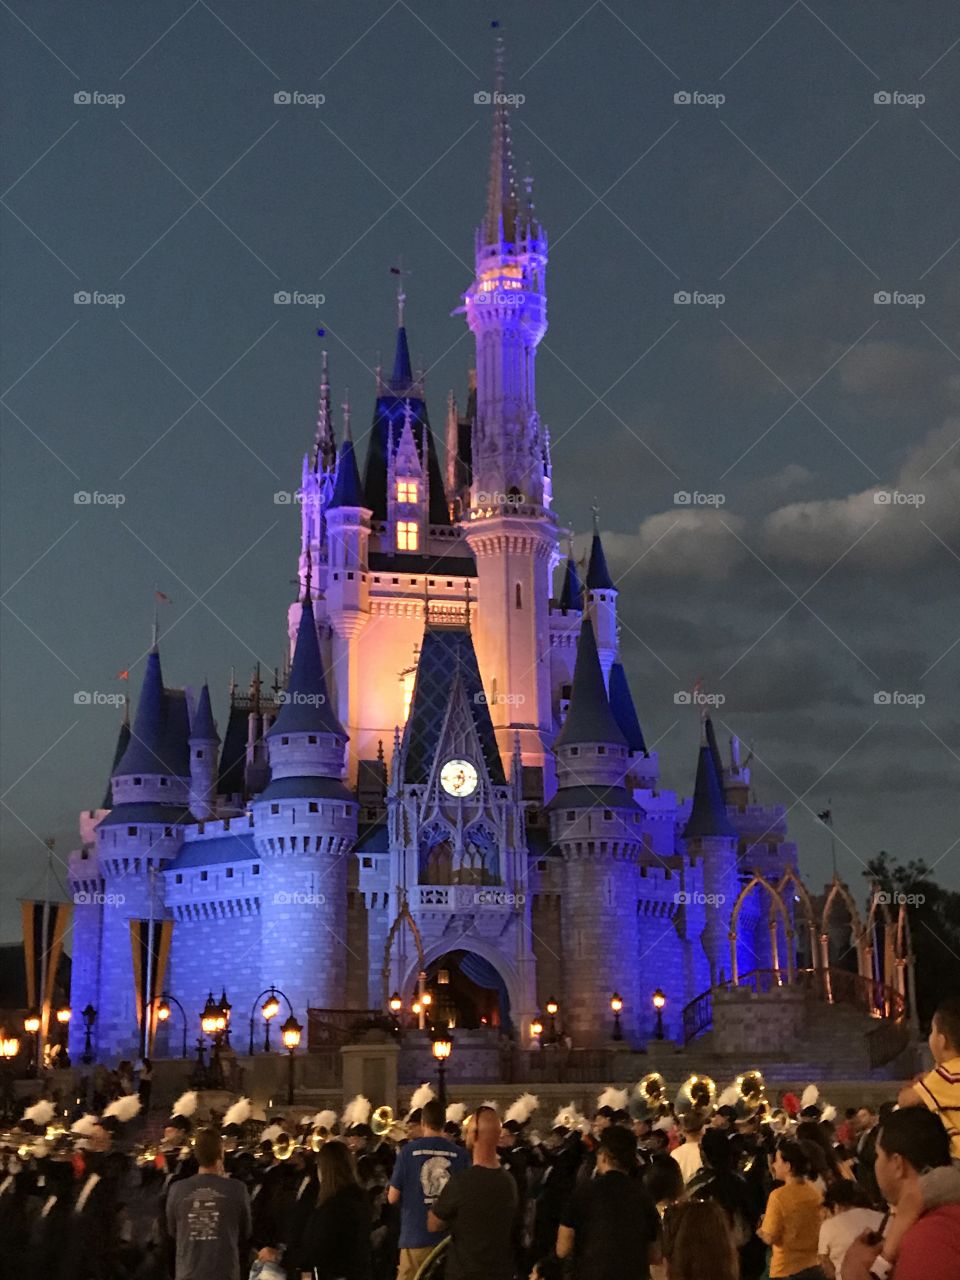 Amazing view of Cinderella’s castle at Disney